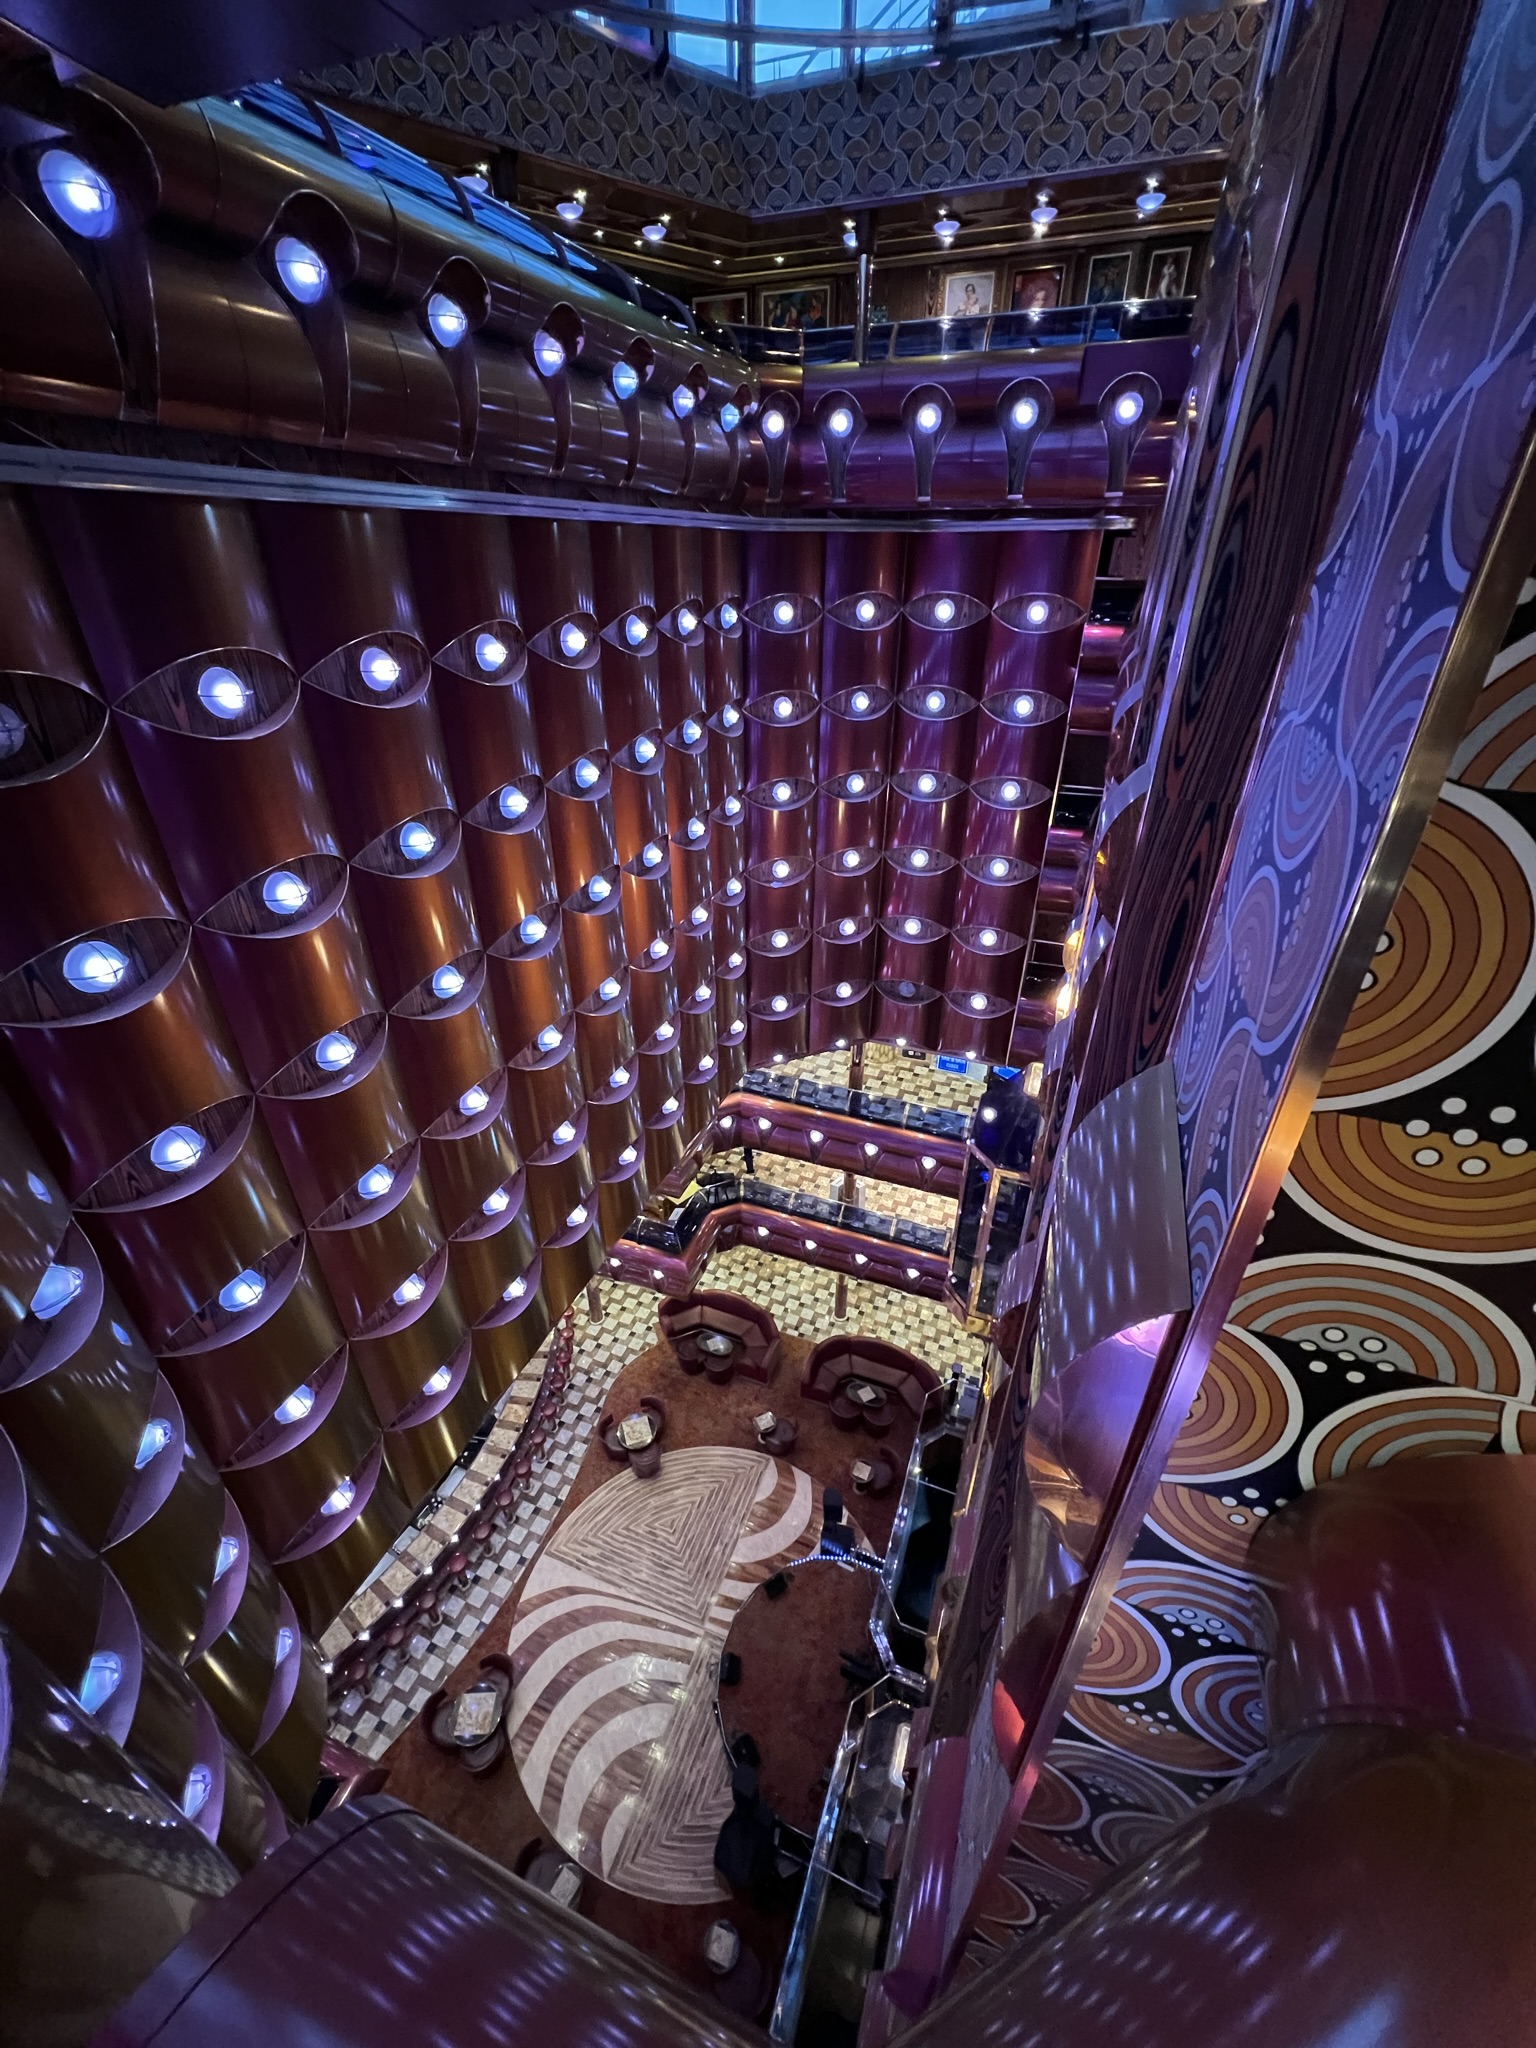 Cruise Ship Shorts – The Atrium of the Carnival Freedom Cruise Ship